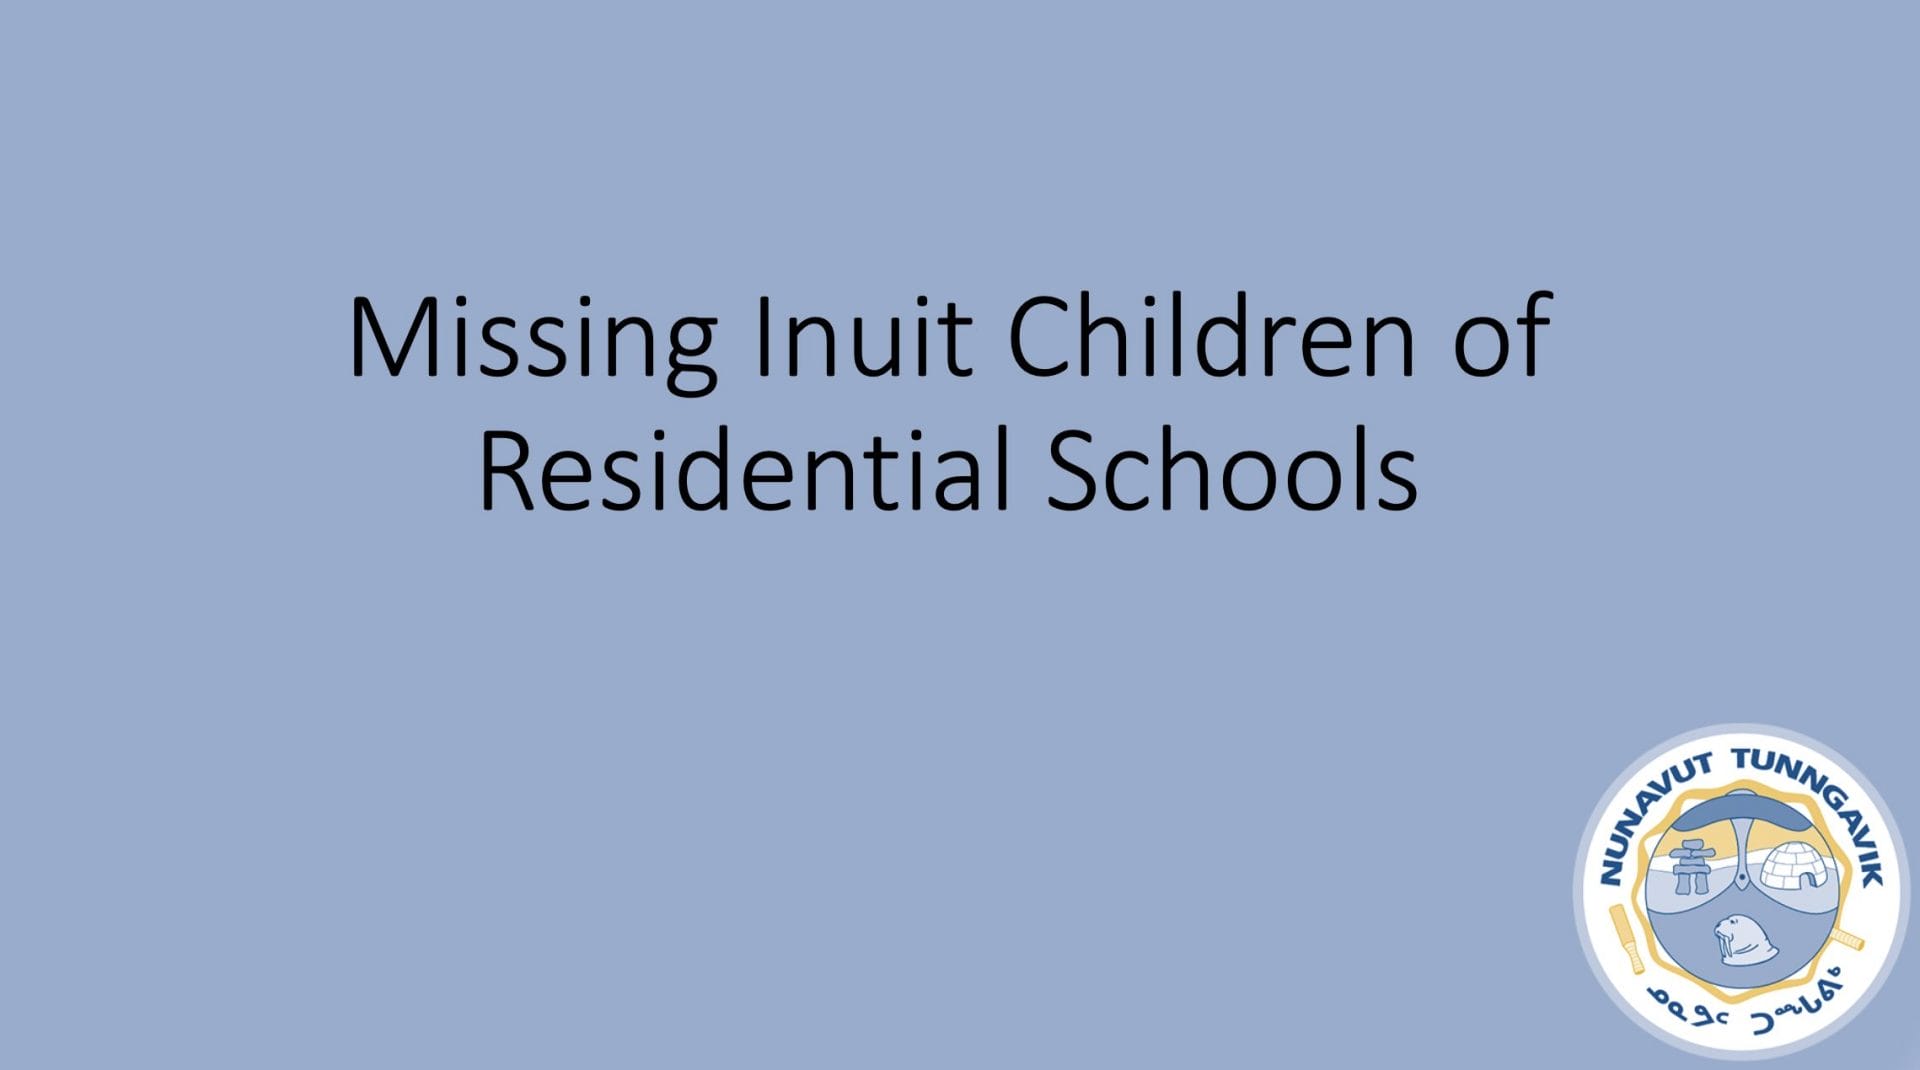  Missing Inuit Children of Residential Schools